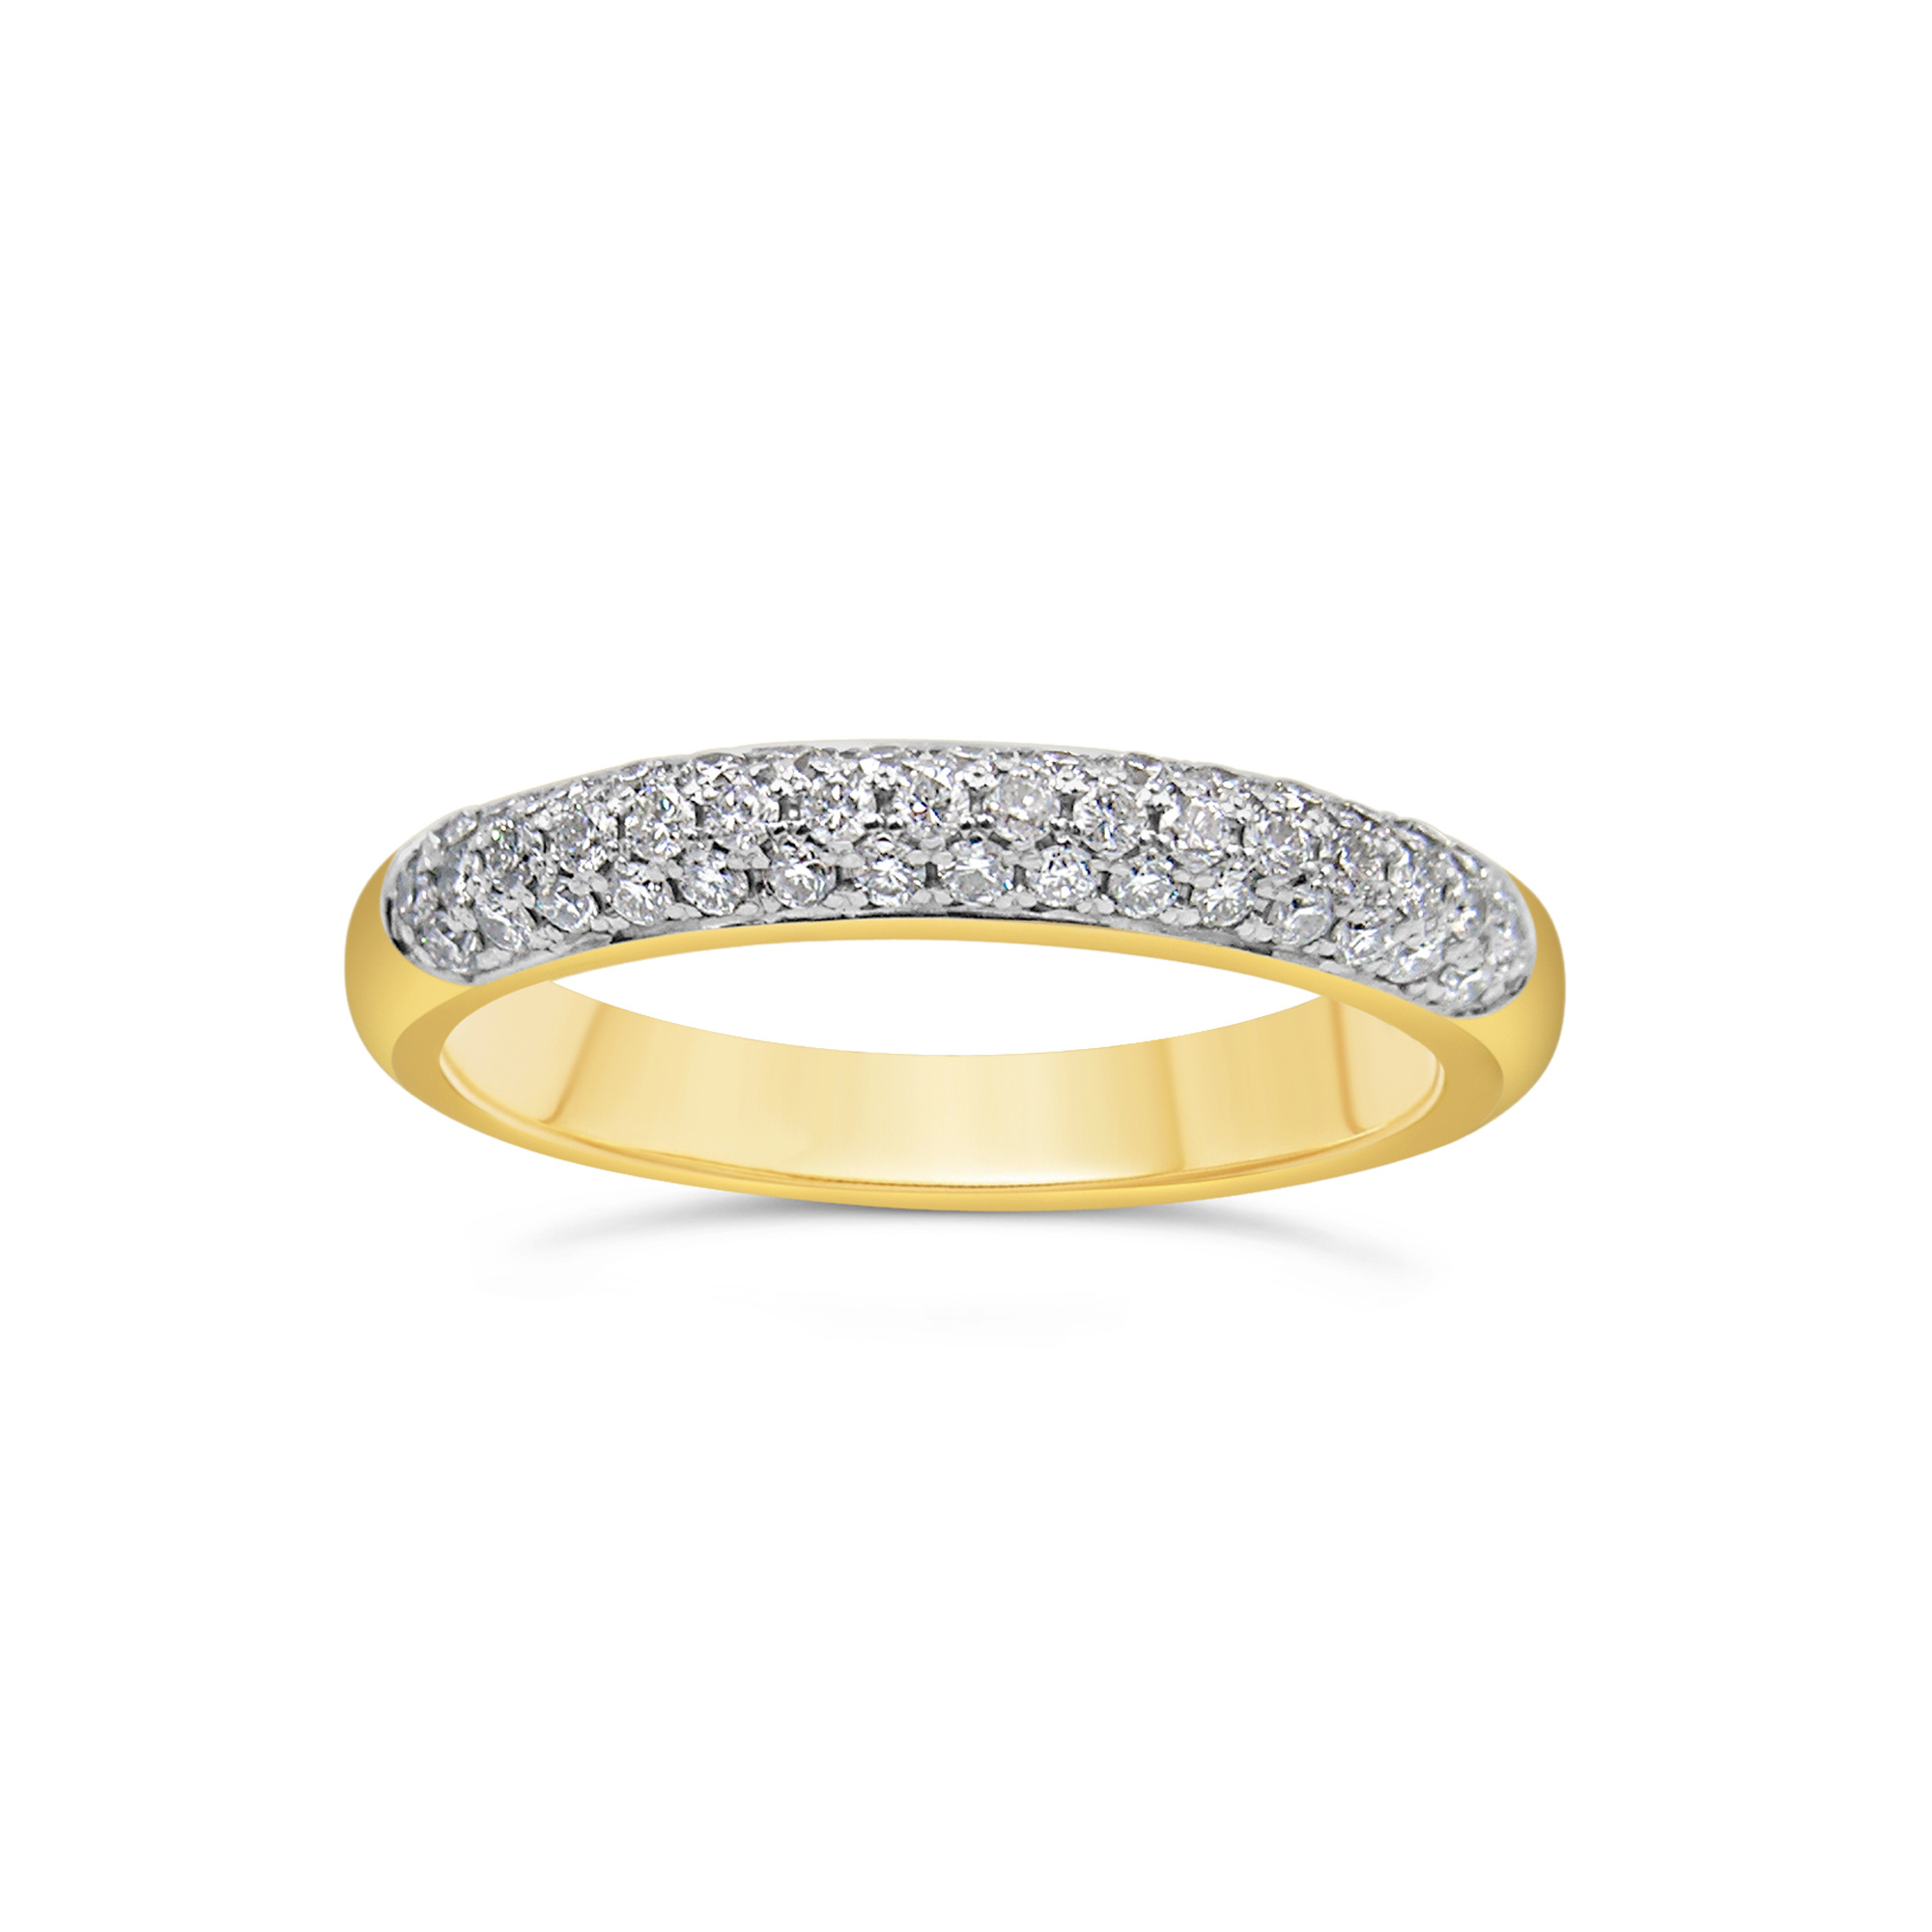 18k yellow & white gold ring with 0.50 ct diamonds